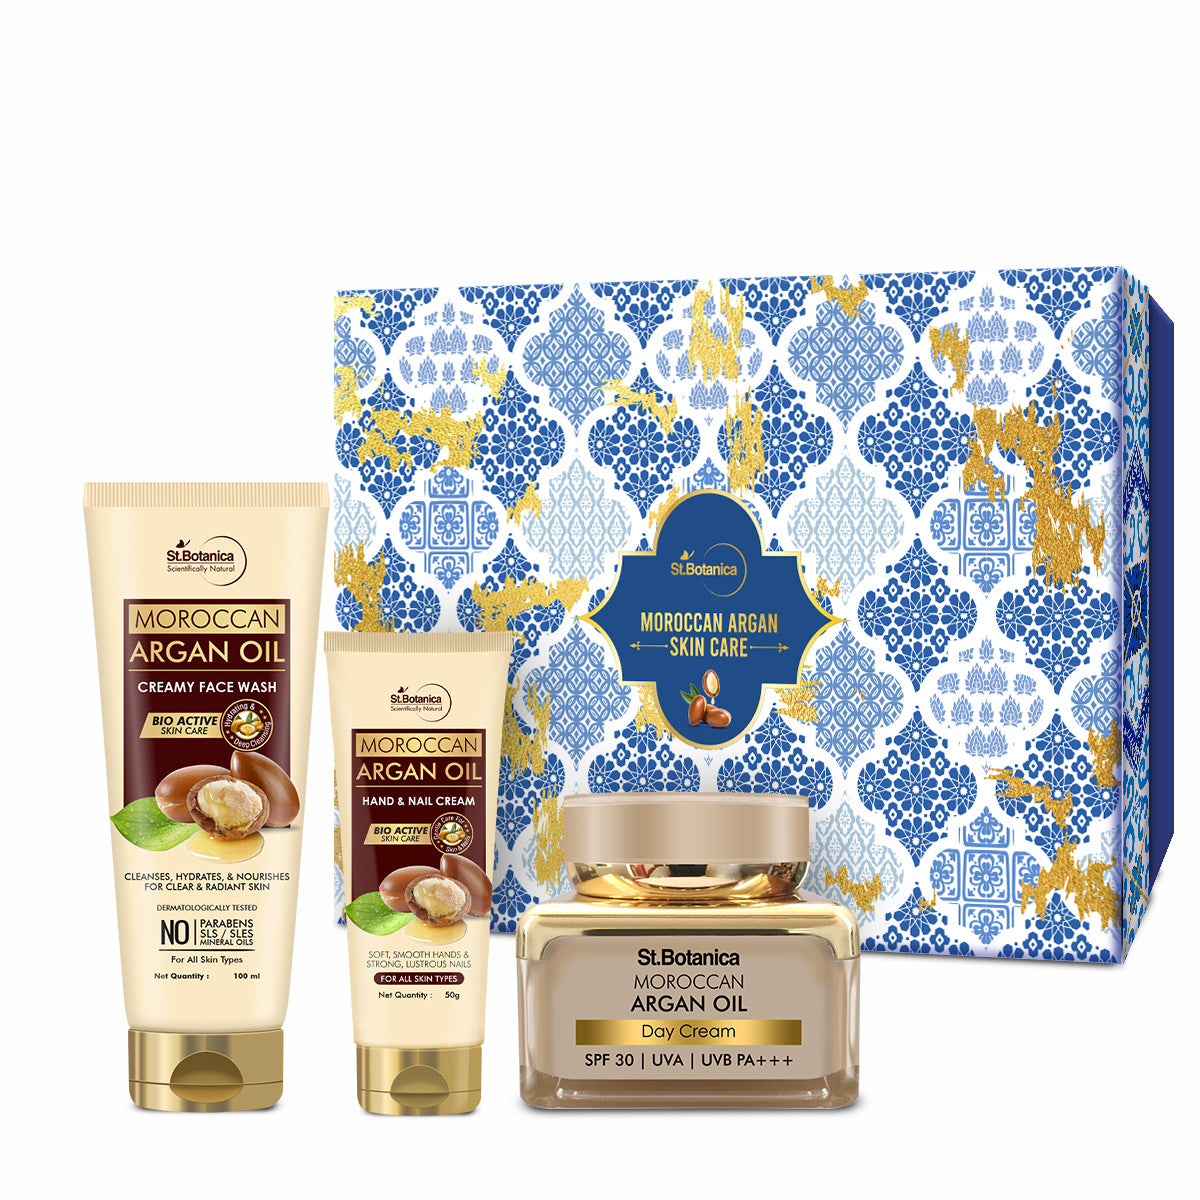 St.Botanica Moroccan Argan Skincare Kit | Day Cream, Face Wash & Hand & Nail Cream | Nourishes Skin